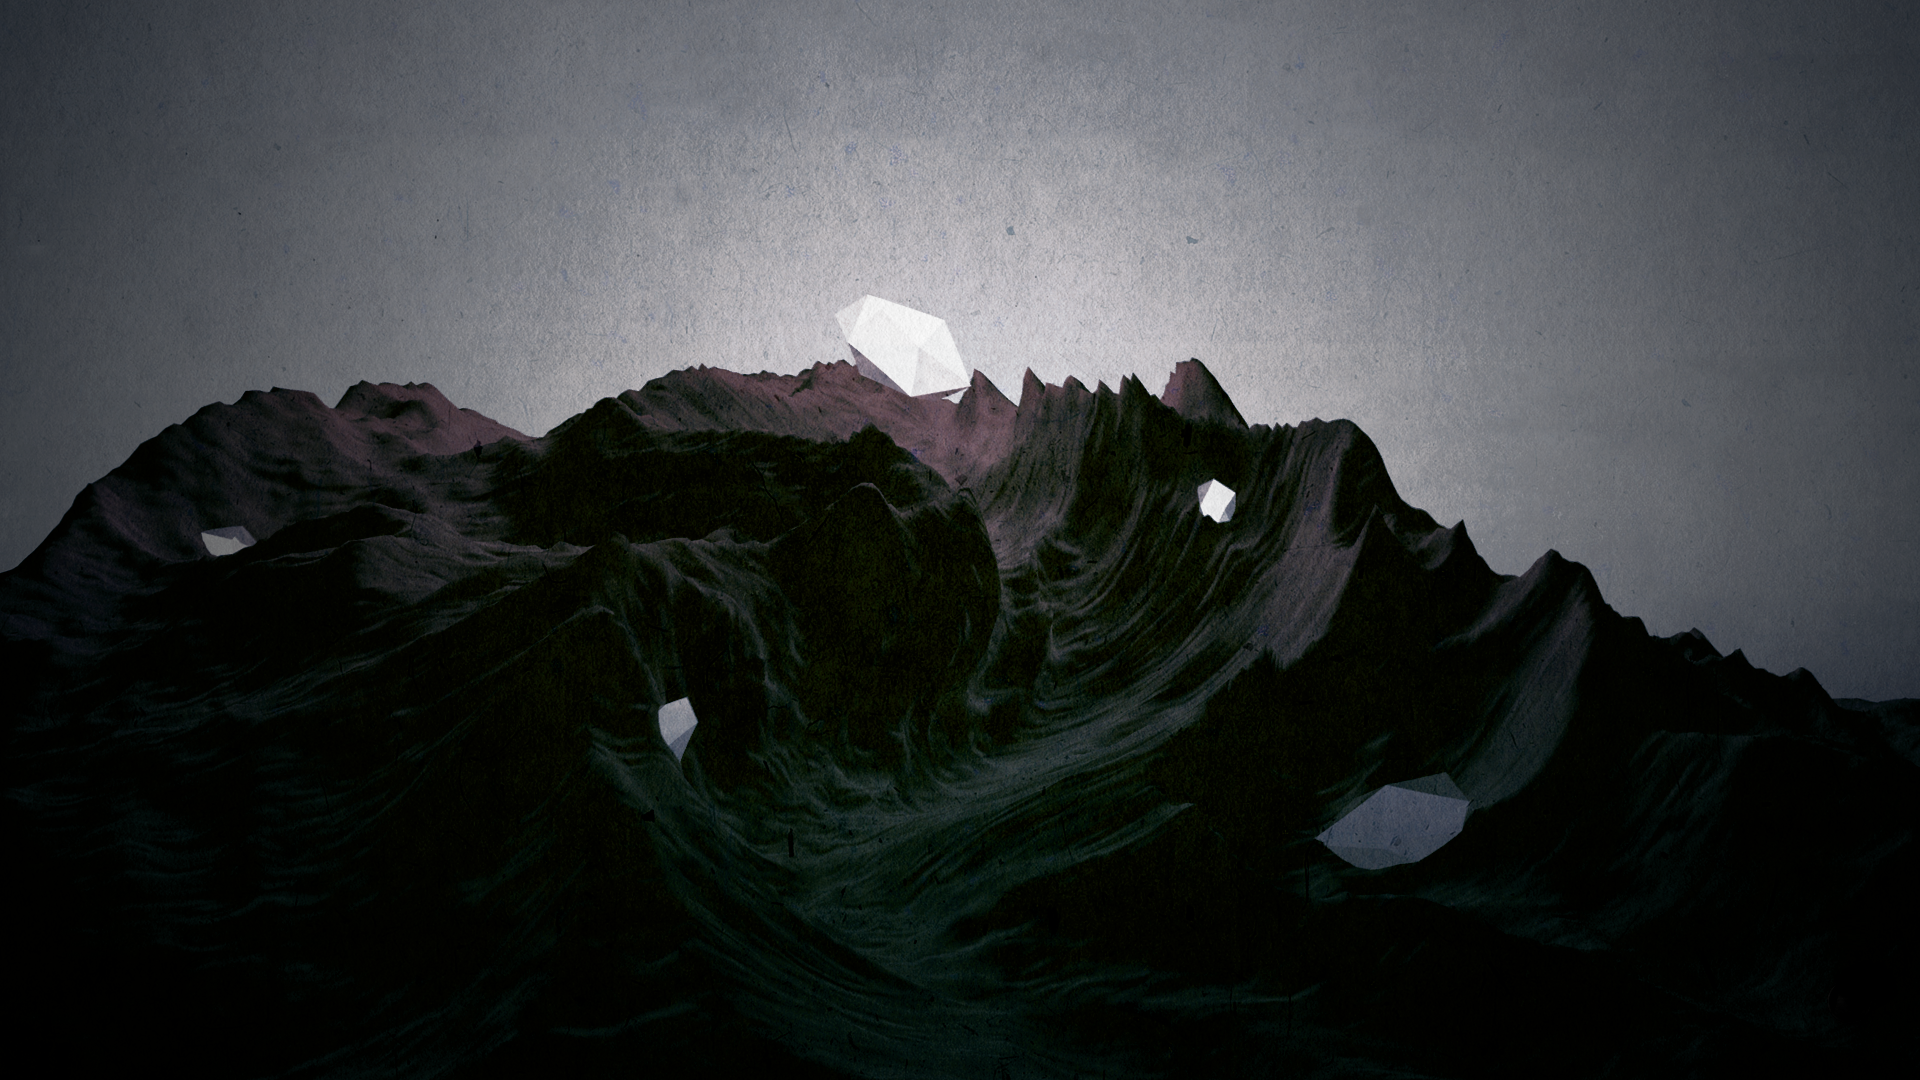 General 1920x1080 minimalism digital art dark abstract landscape nature mountains